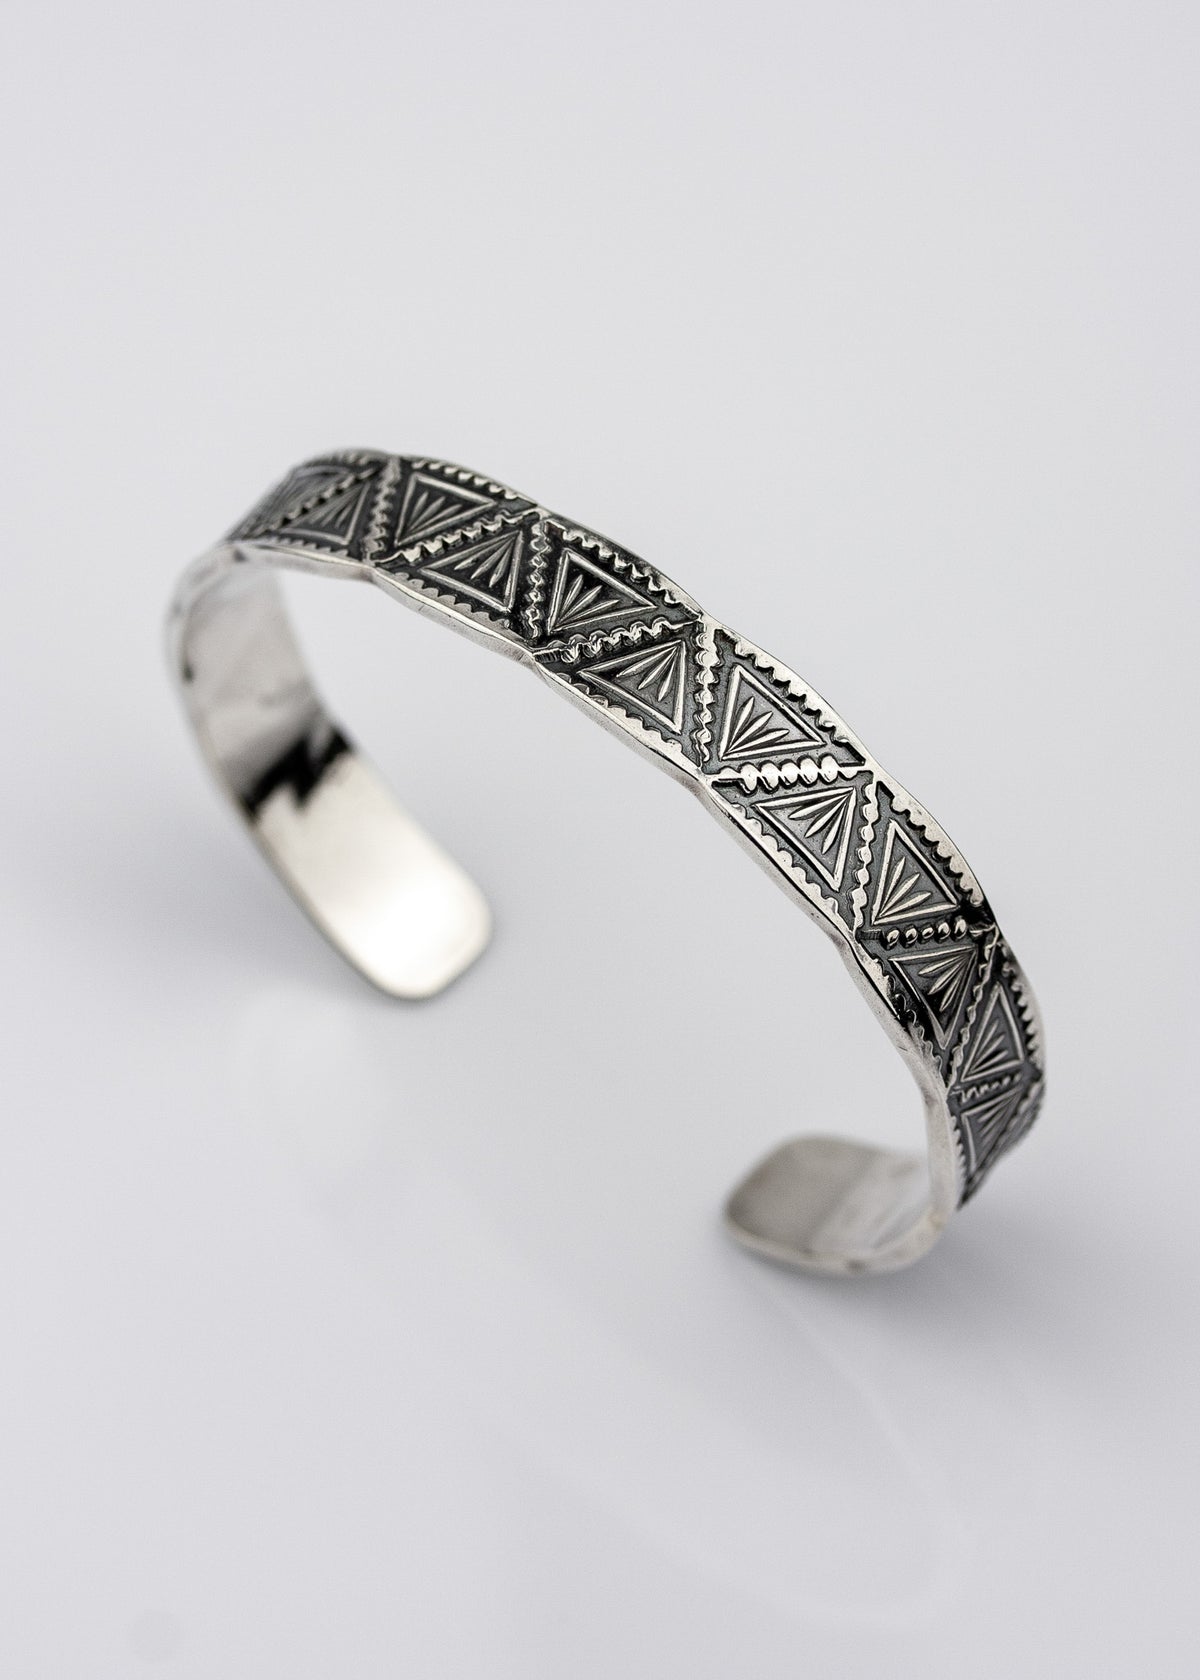 Textured thick silver cuff bracelet